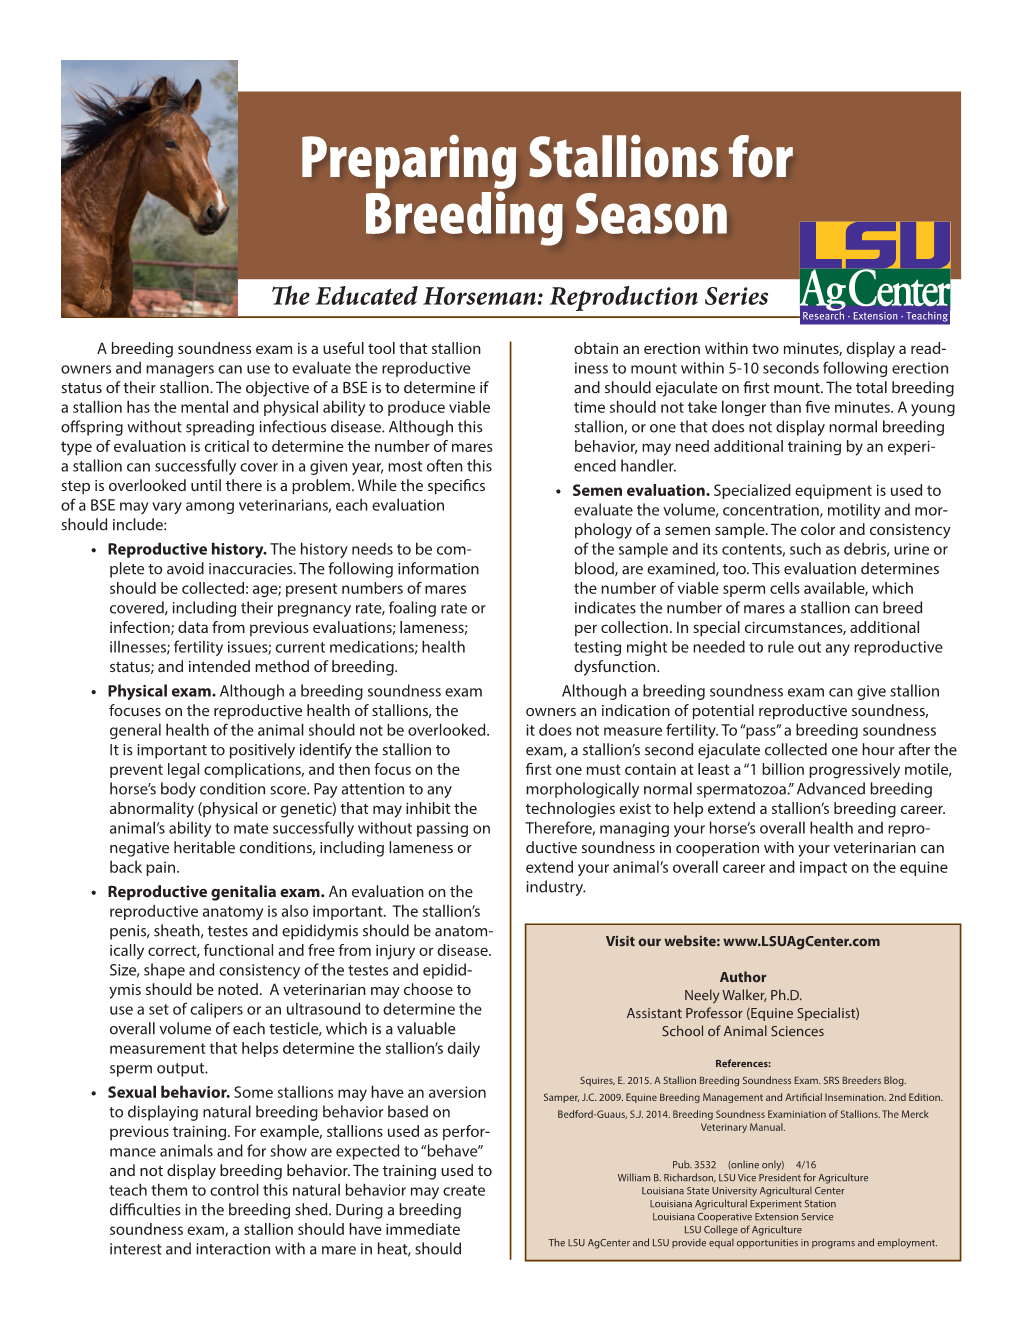 Preparing Stallions for Breeding Season